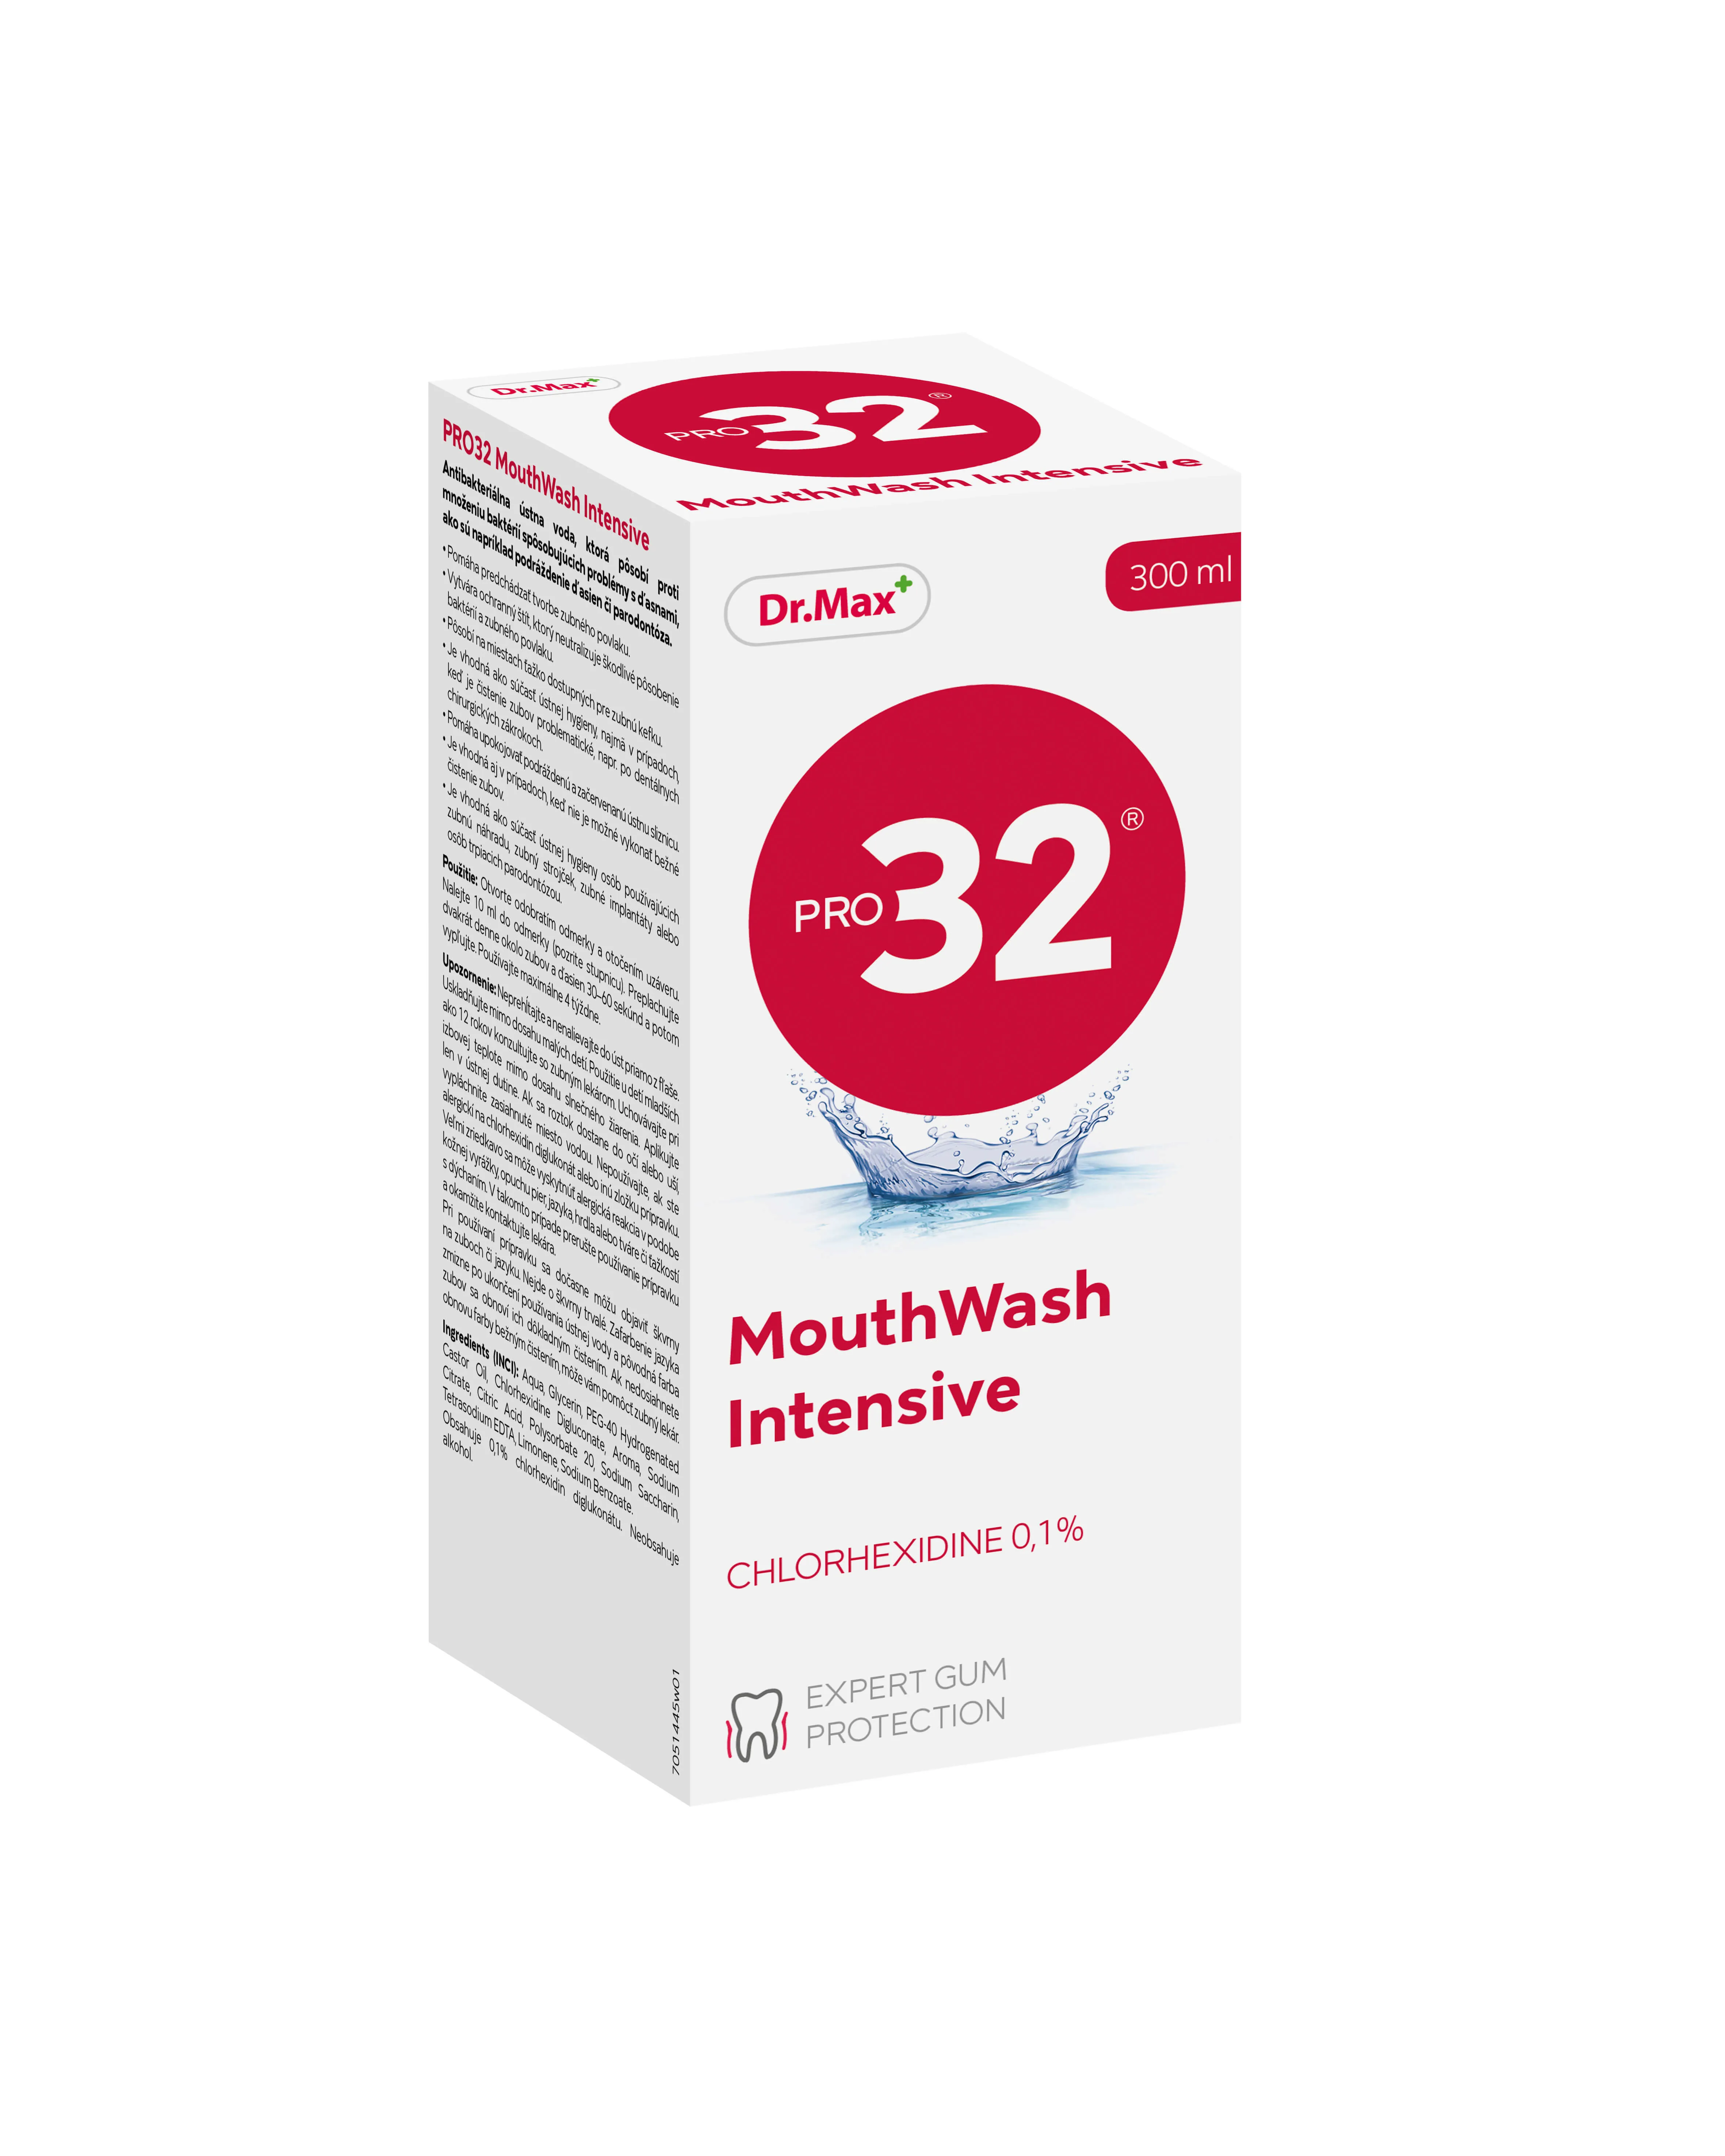 Pro32 MouthWash Intensive Dr.Max, płyn do płukania jamy ustnej, 300 ml 